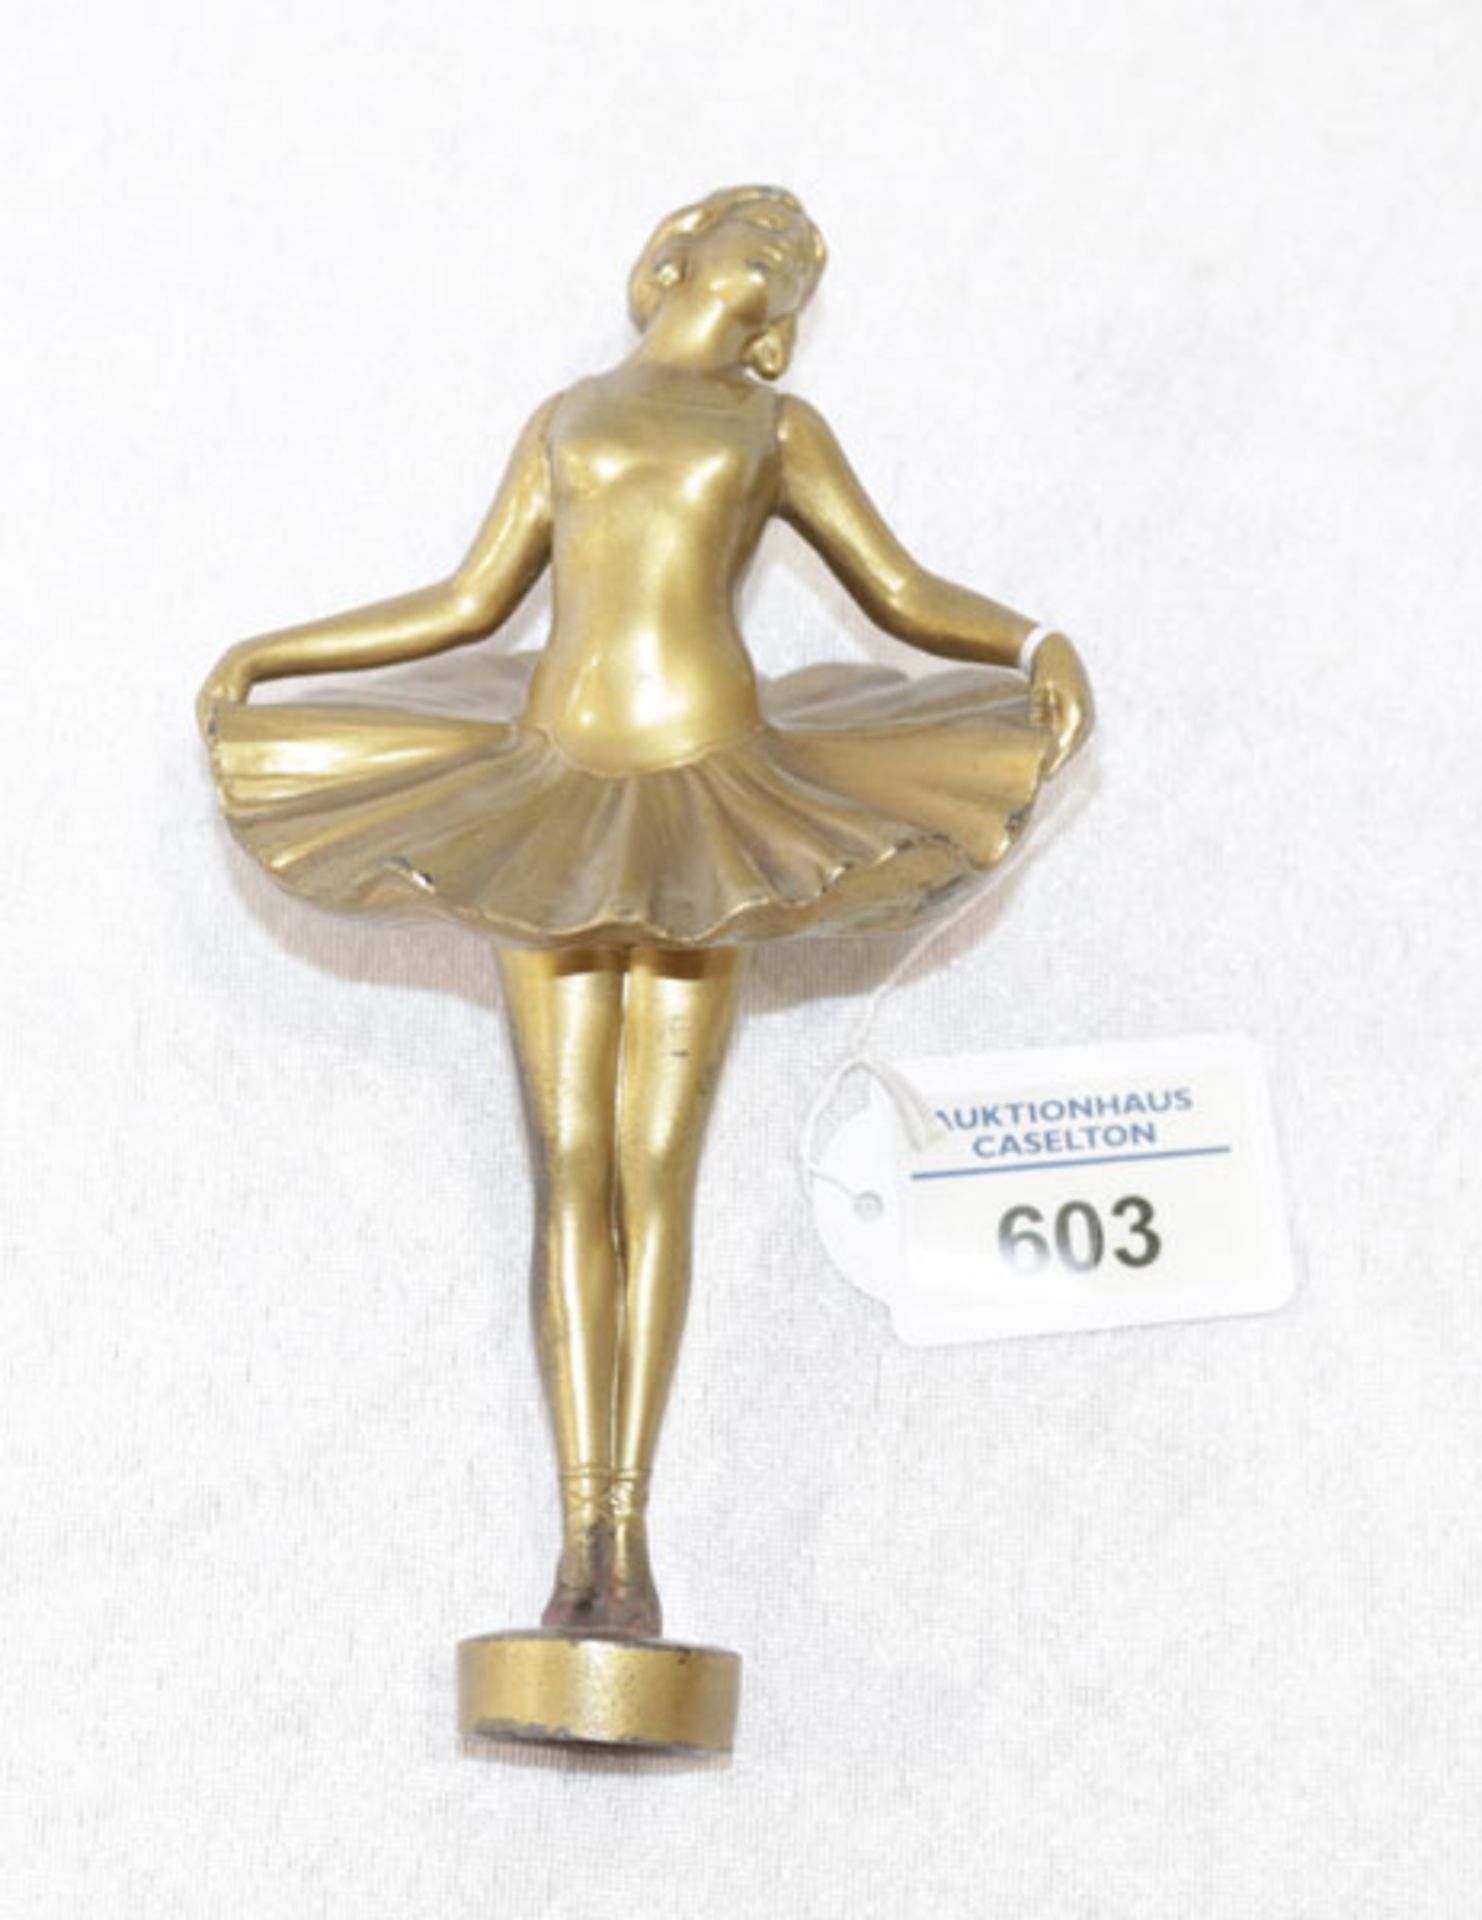 Metall Figurenaufsatz 'Tänzerin', gold bemalt, H 18 cm, D 10 cm, Altersspuren